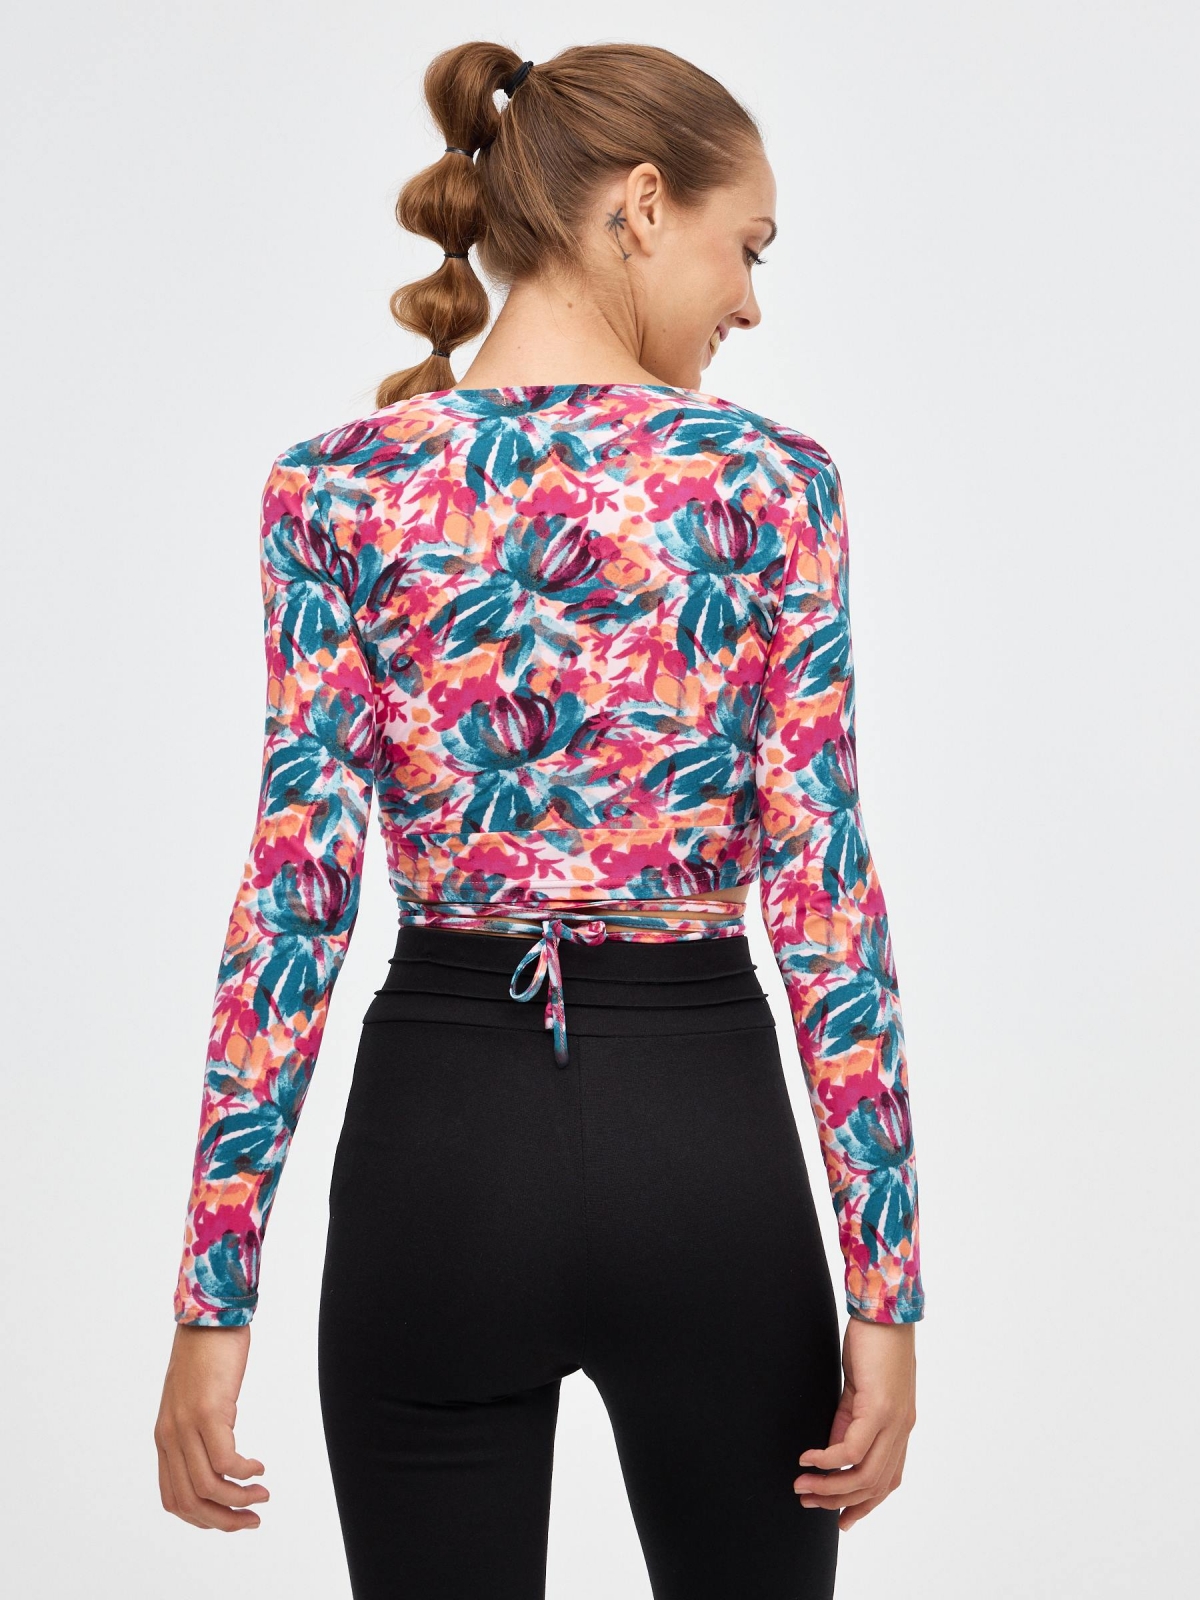 Camisa com print floral e lace up multicolorido vista meia traseira